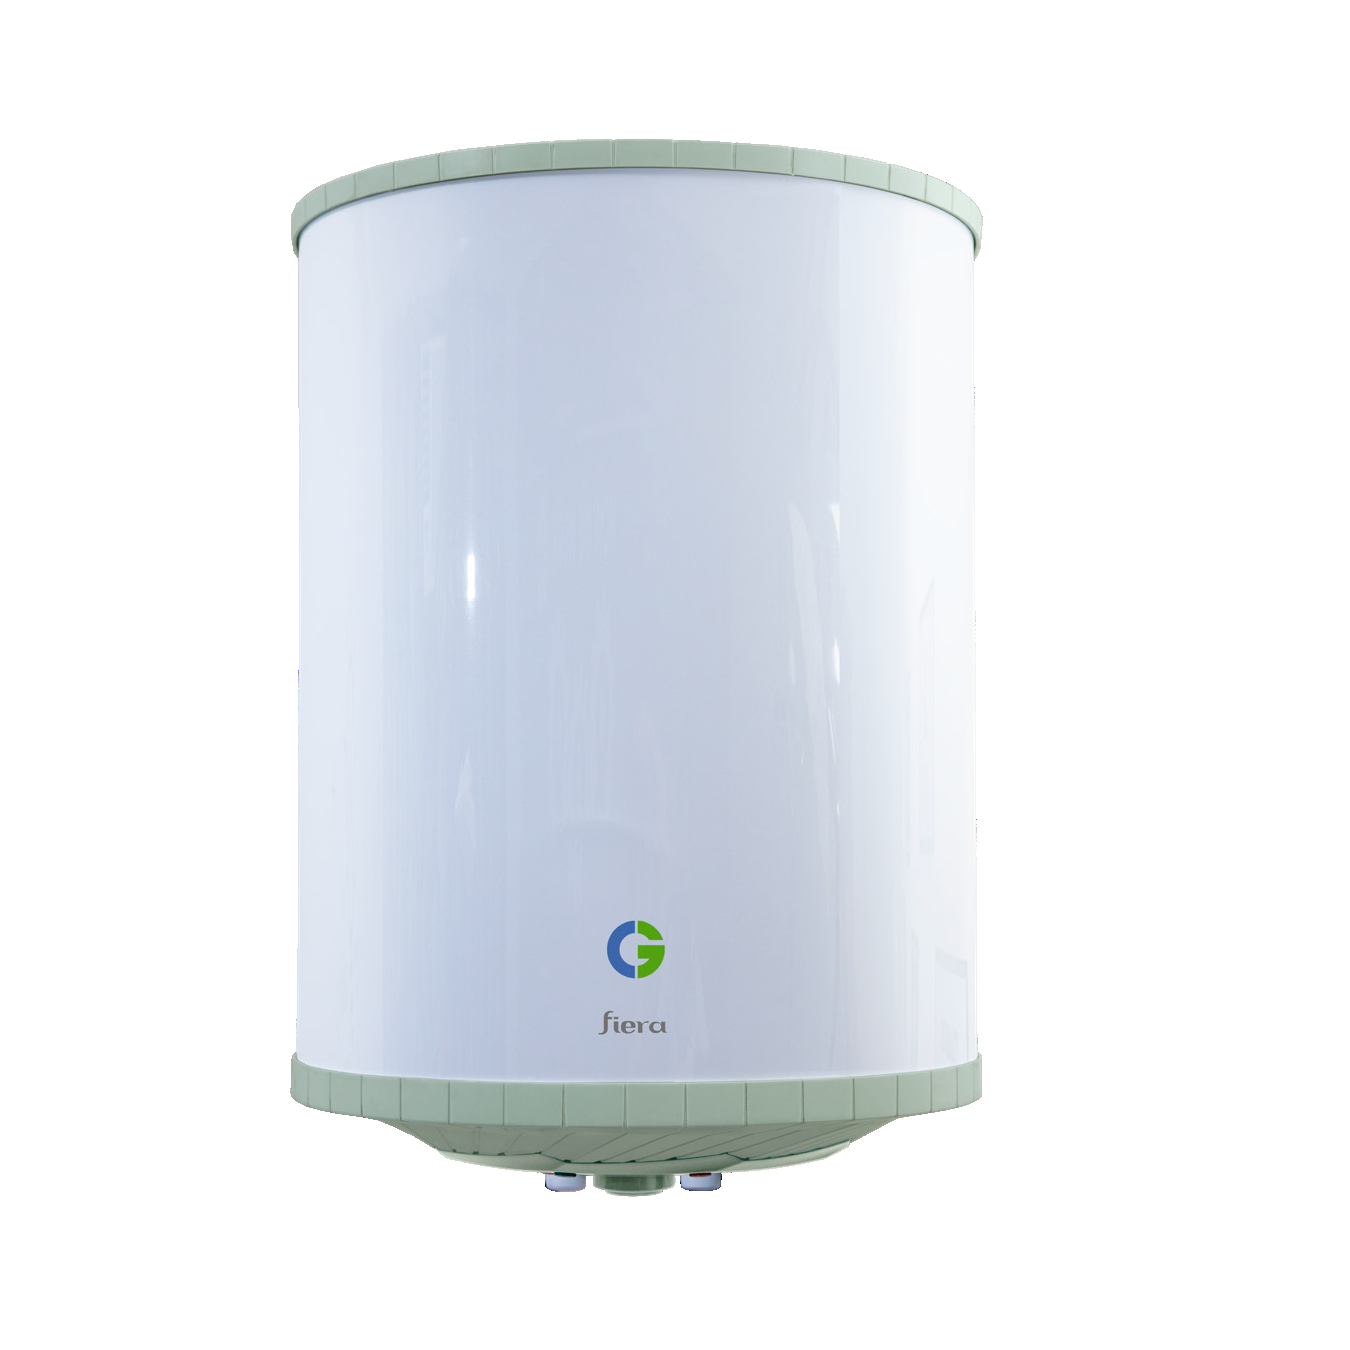 CG Storage Water Heater 10L Capacity 5 Star Rated CG FIERA